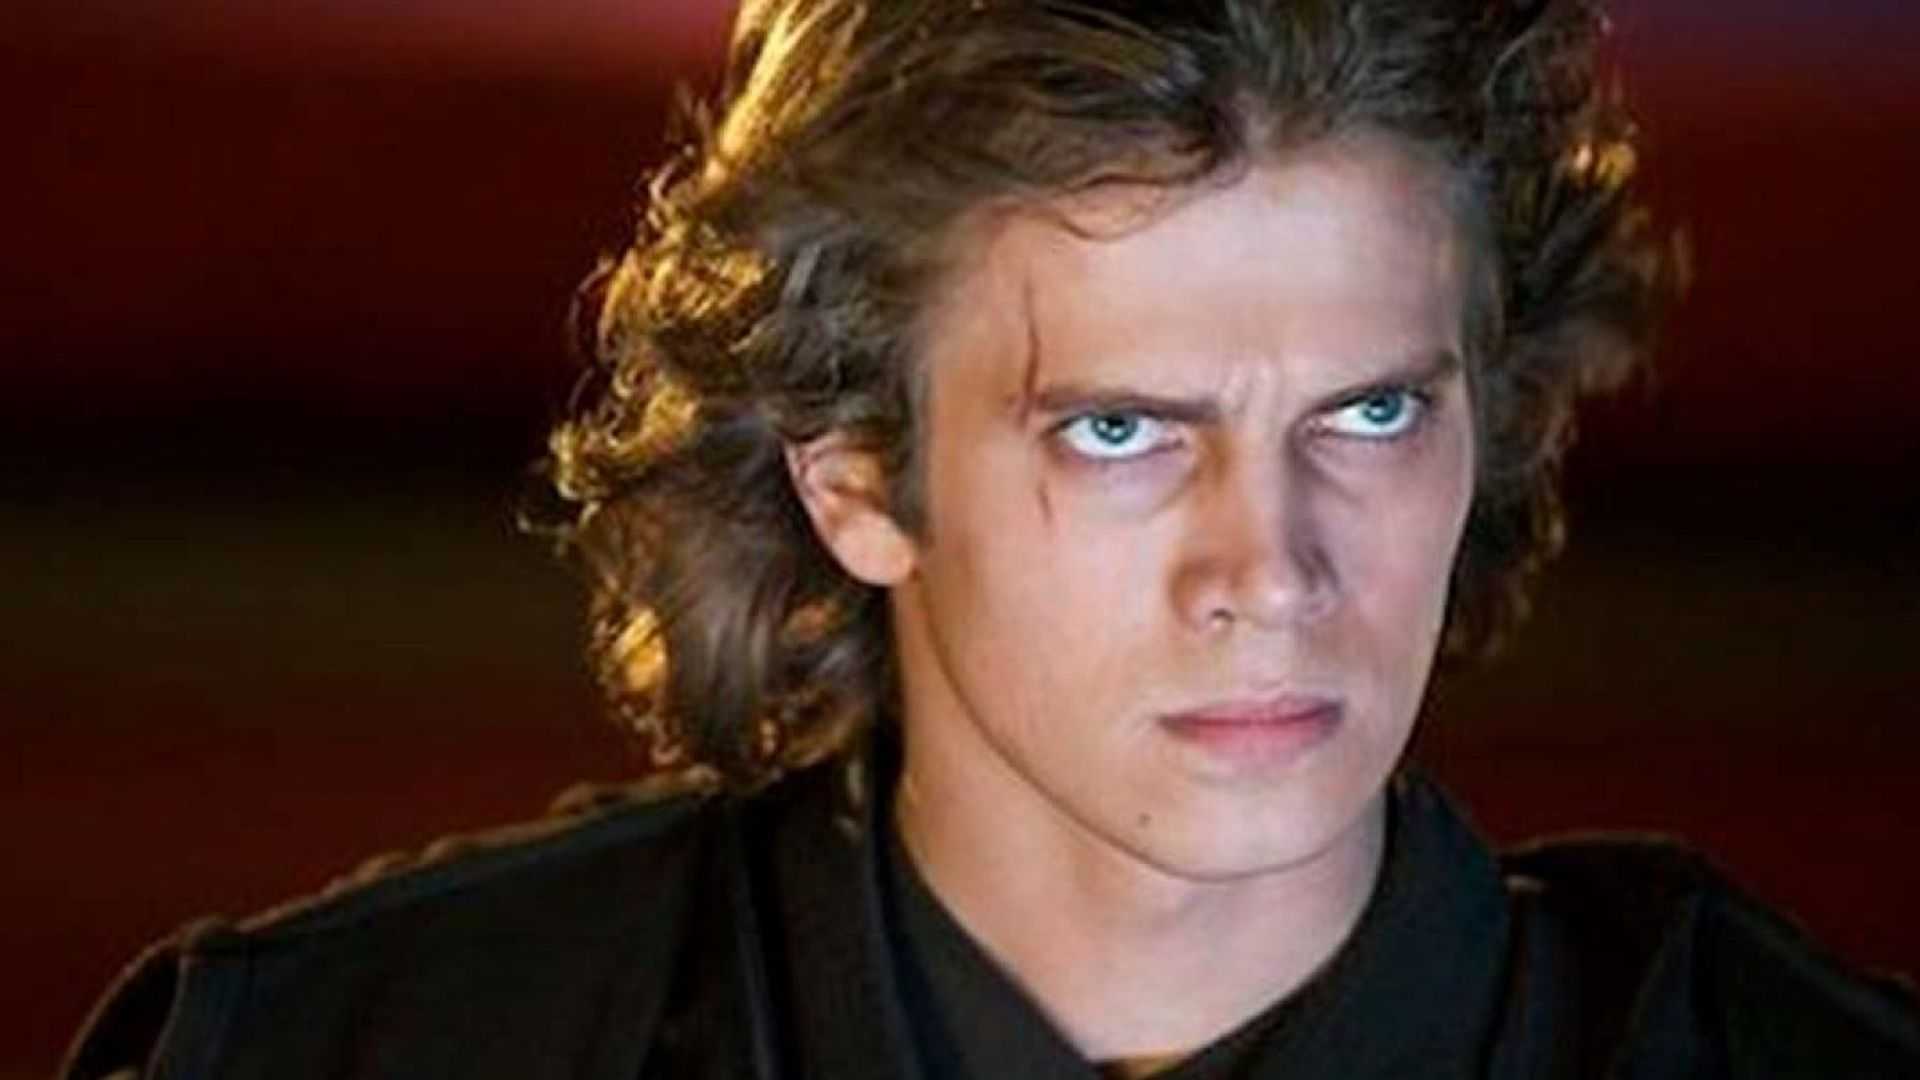 Obi-Wan Kenobi star Hayden Christen believes Darth Vader could have been redeemed before Star Wars: Return of the Jedi